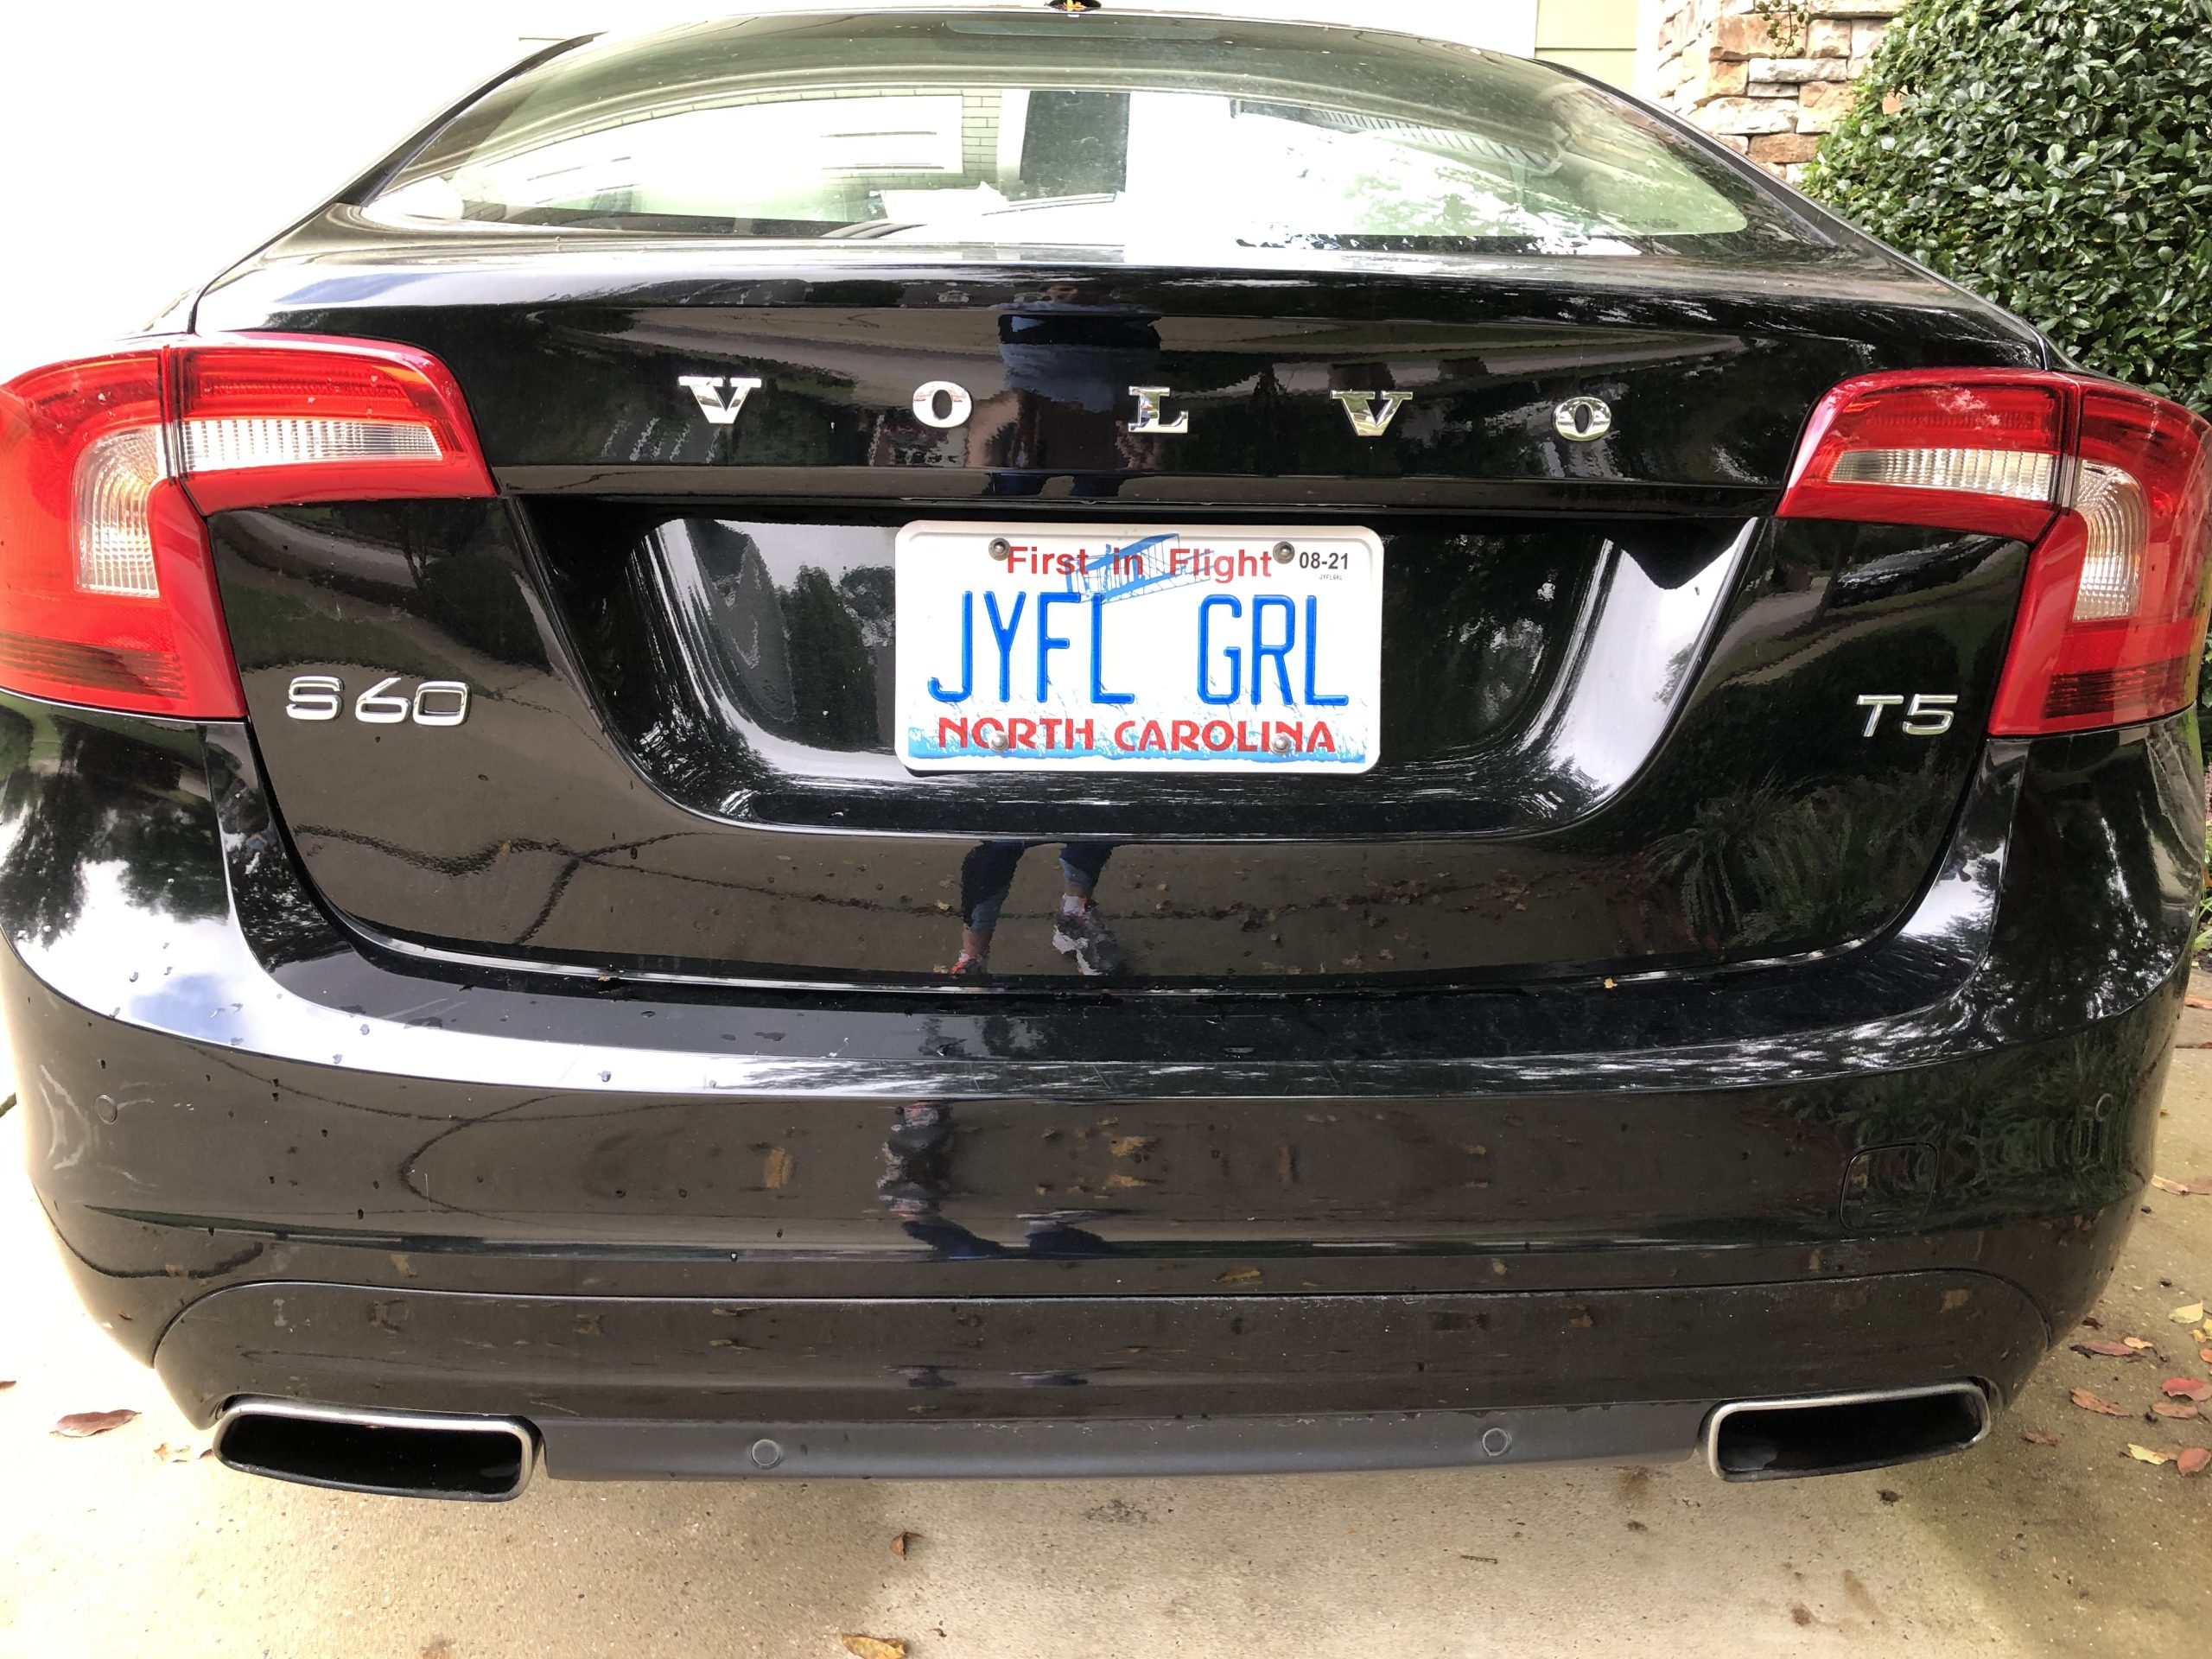 Marcys Volvo with Joyful Girl license plate